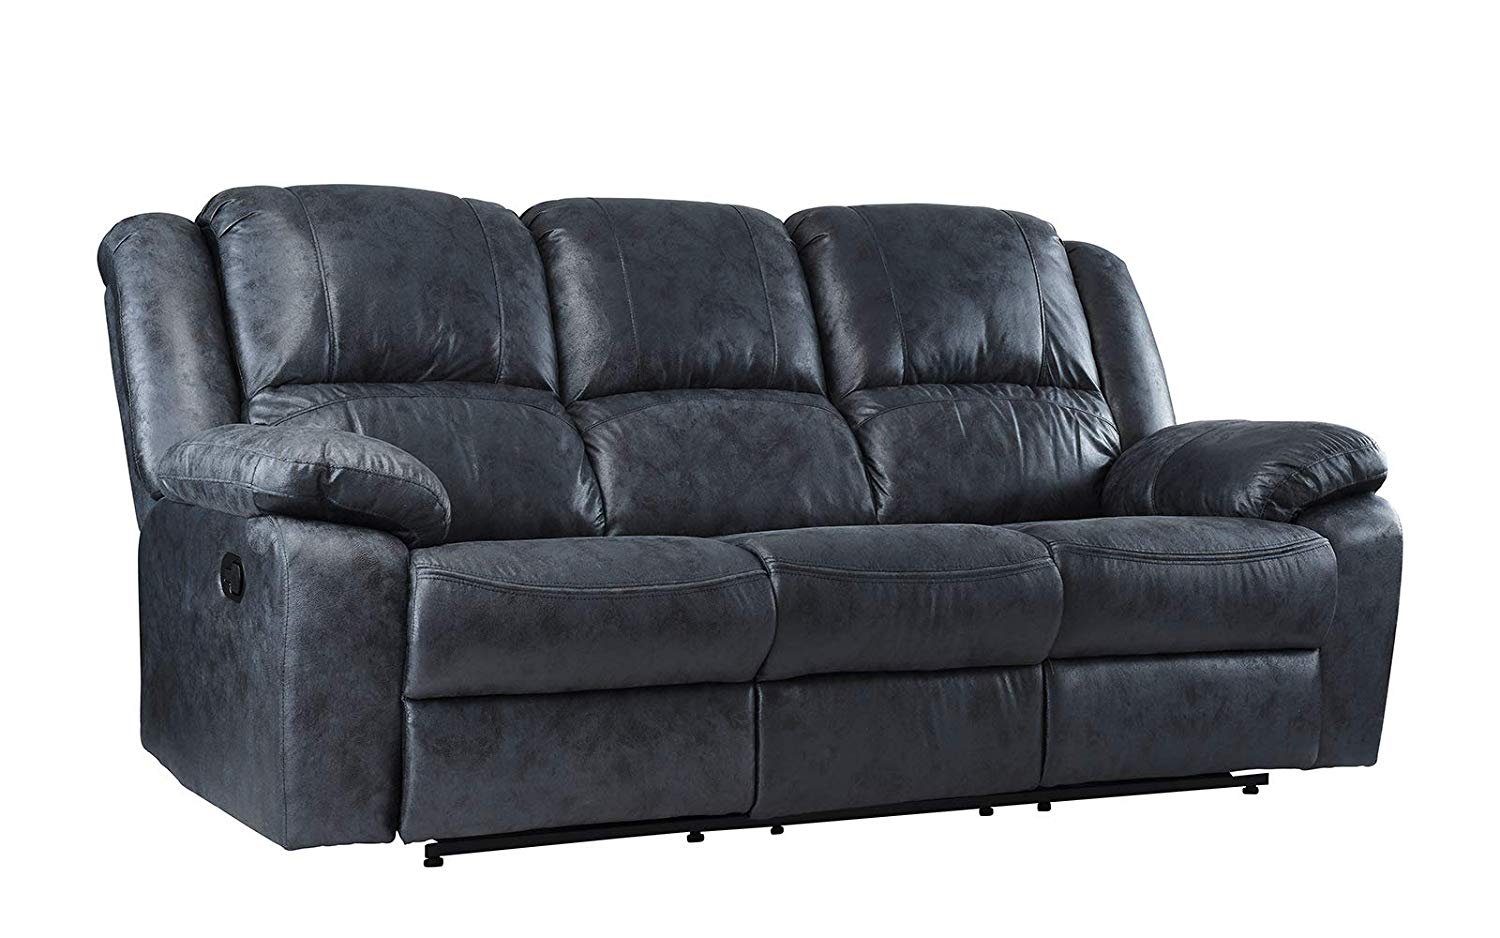 73 inch leather sofa